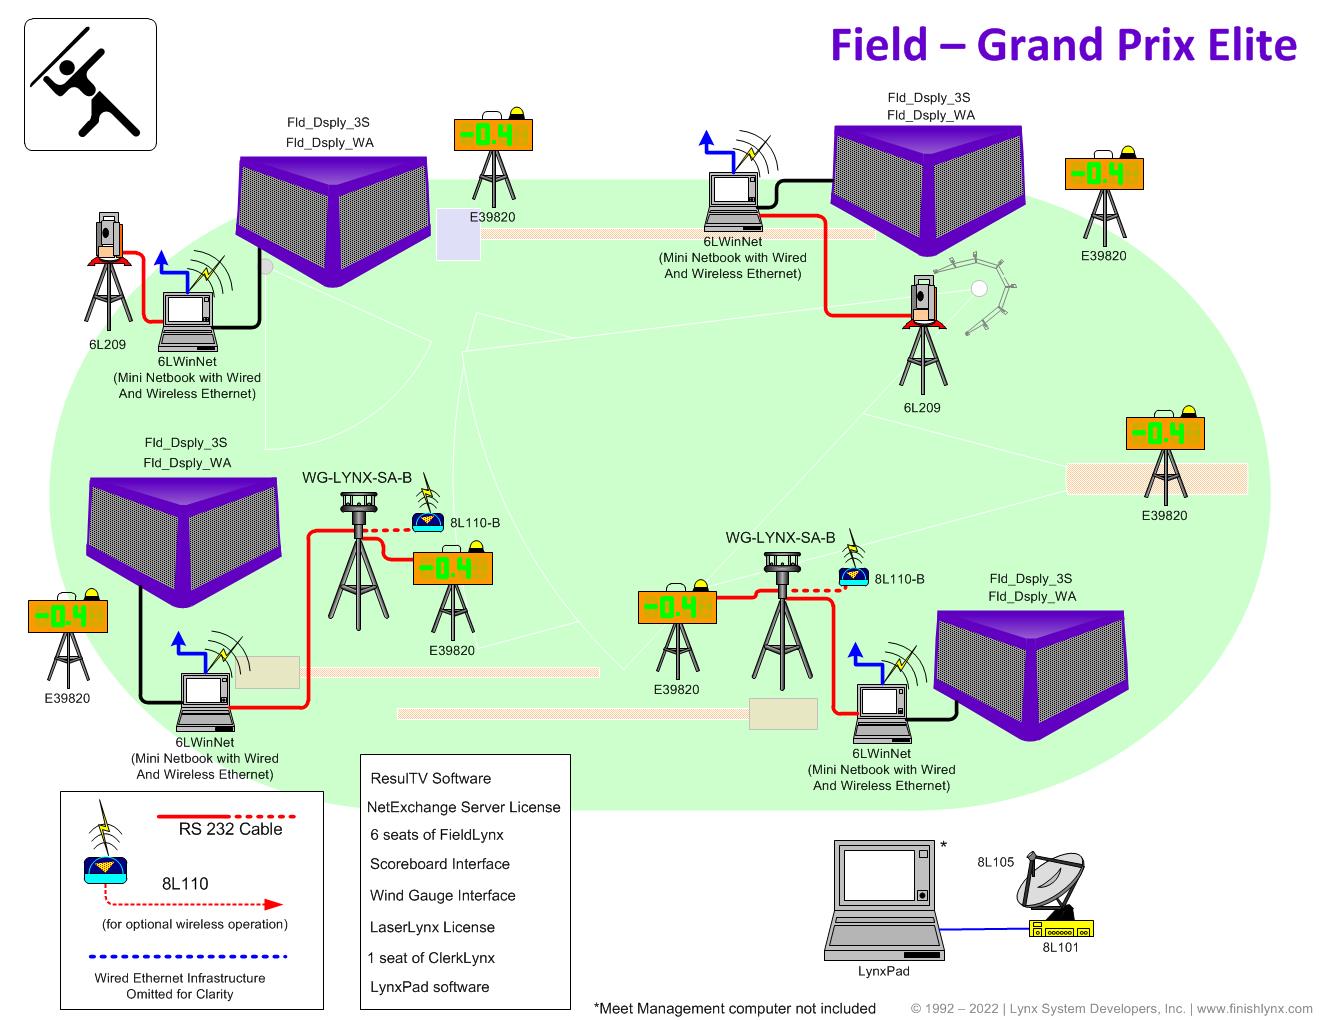 Field - Grand Prrix Elite